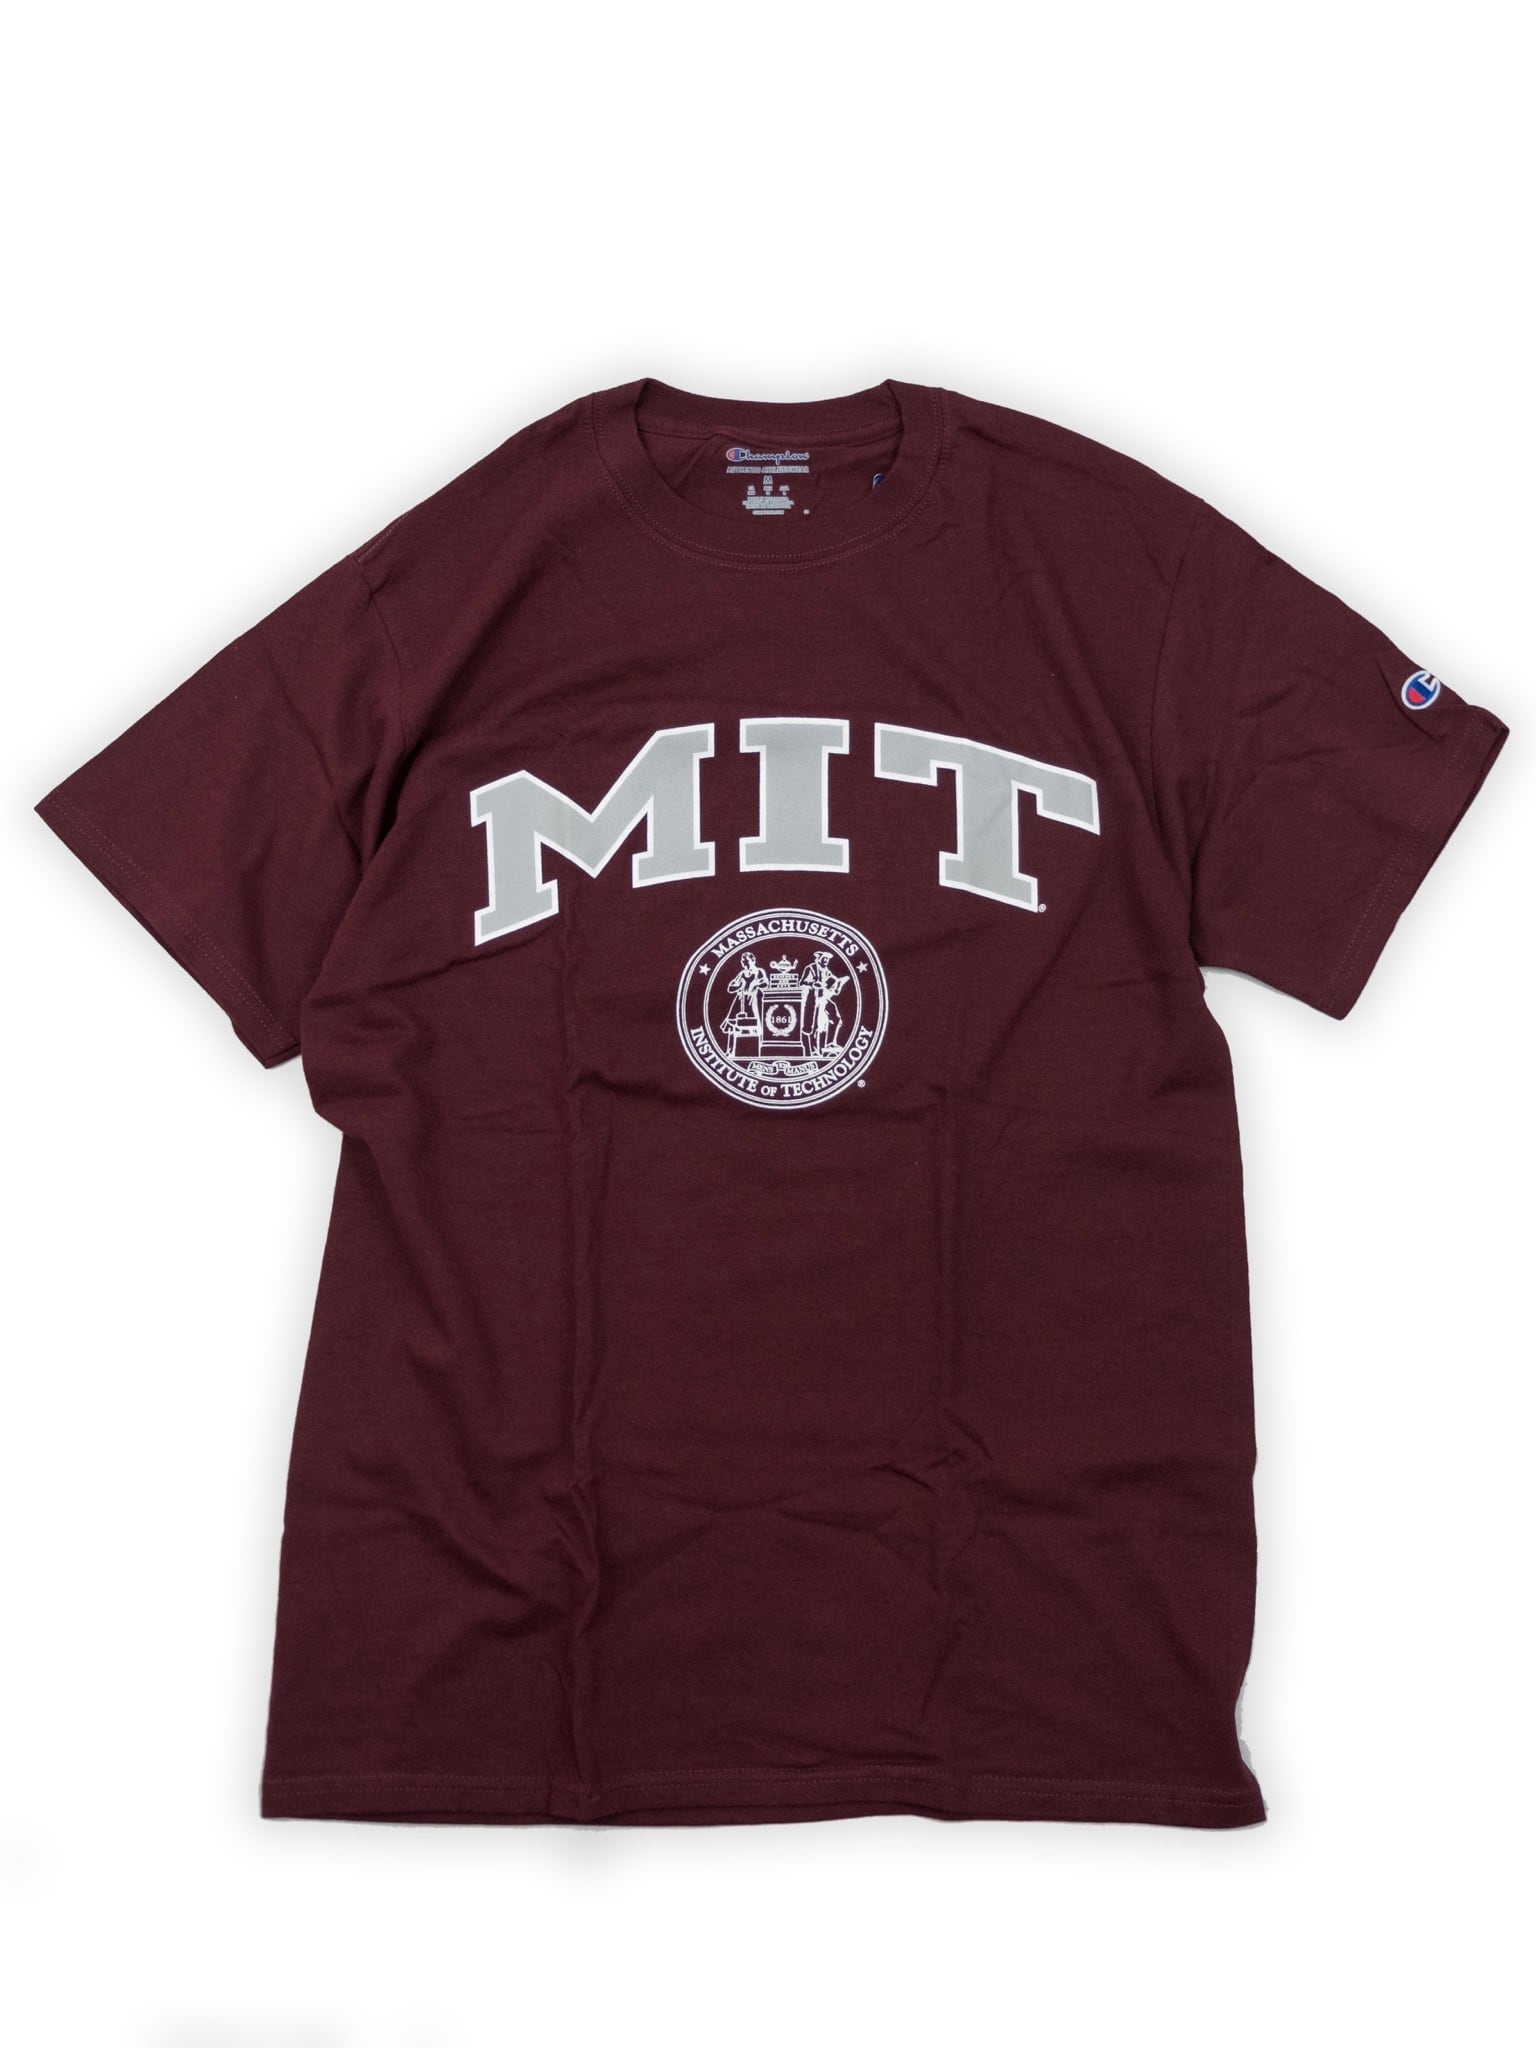 Champion "MIT logo T-shirt" | MESS CRIB TOKYO ONLINE STORE